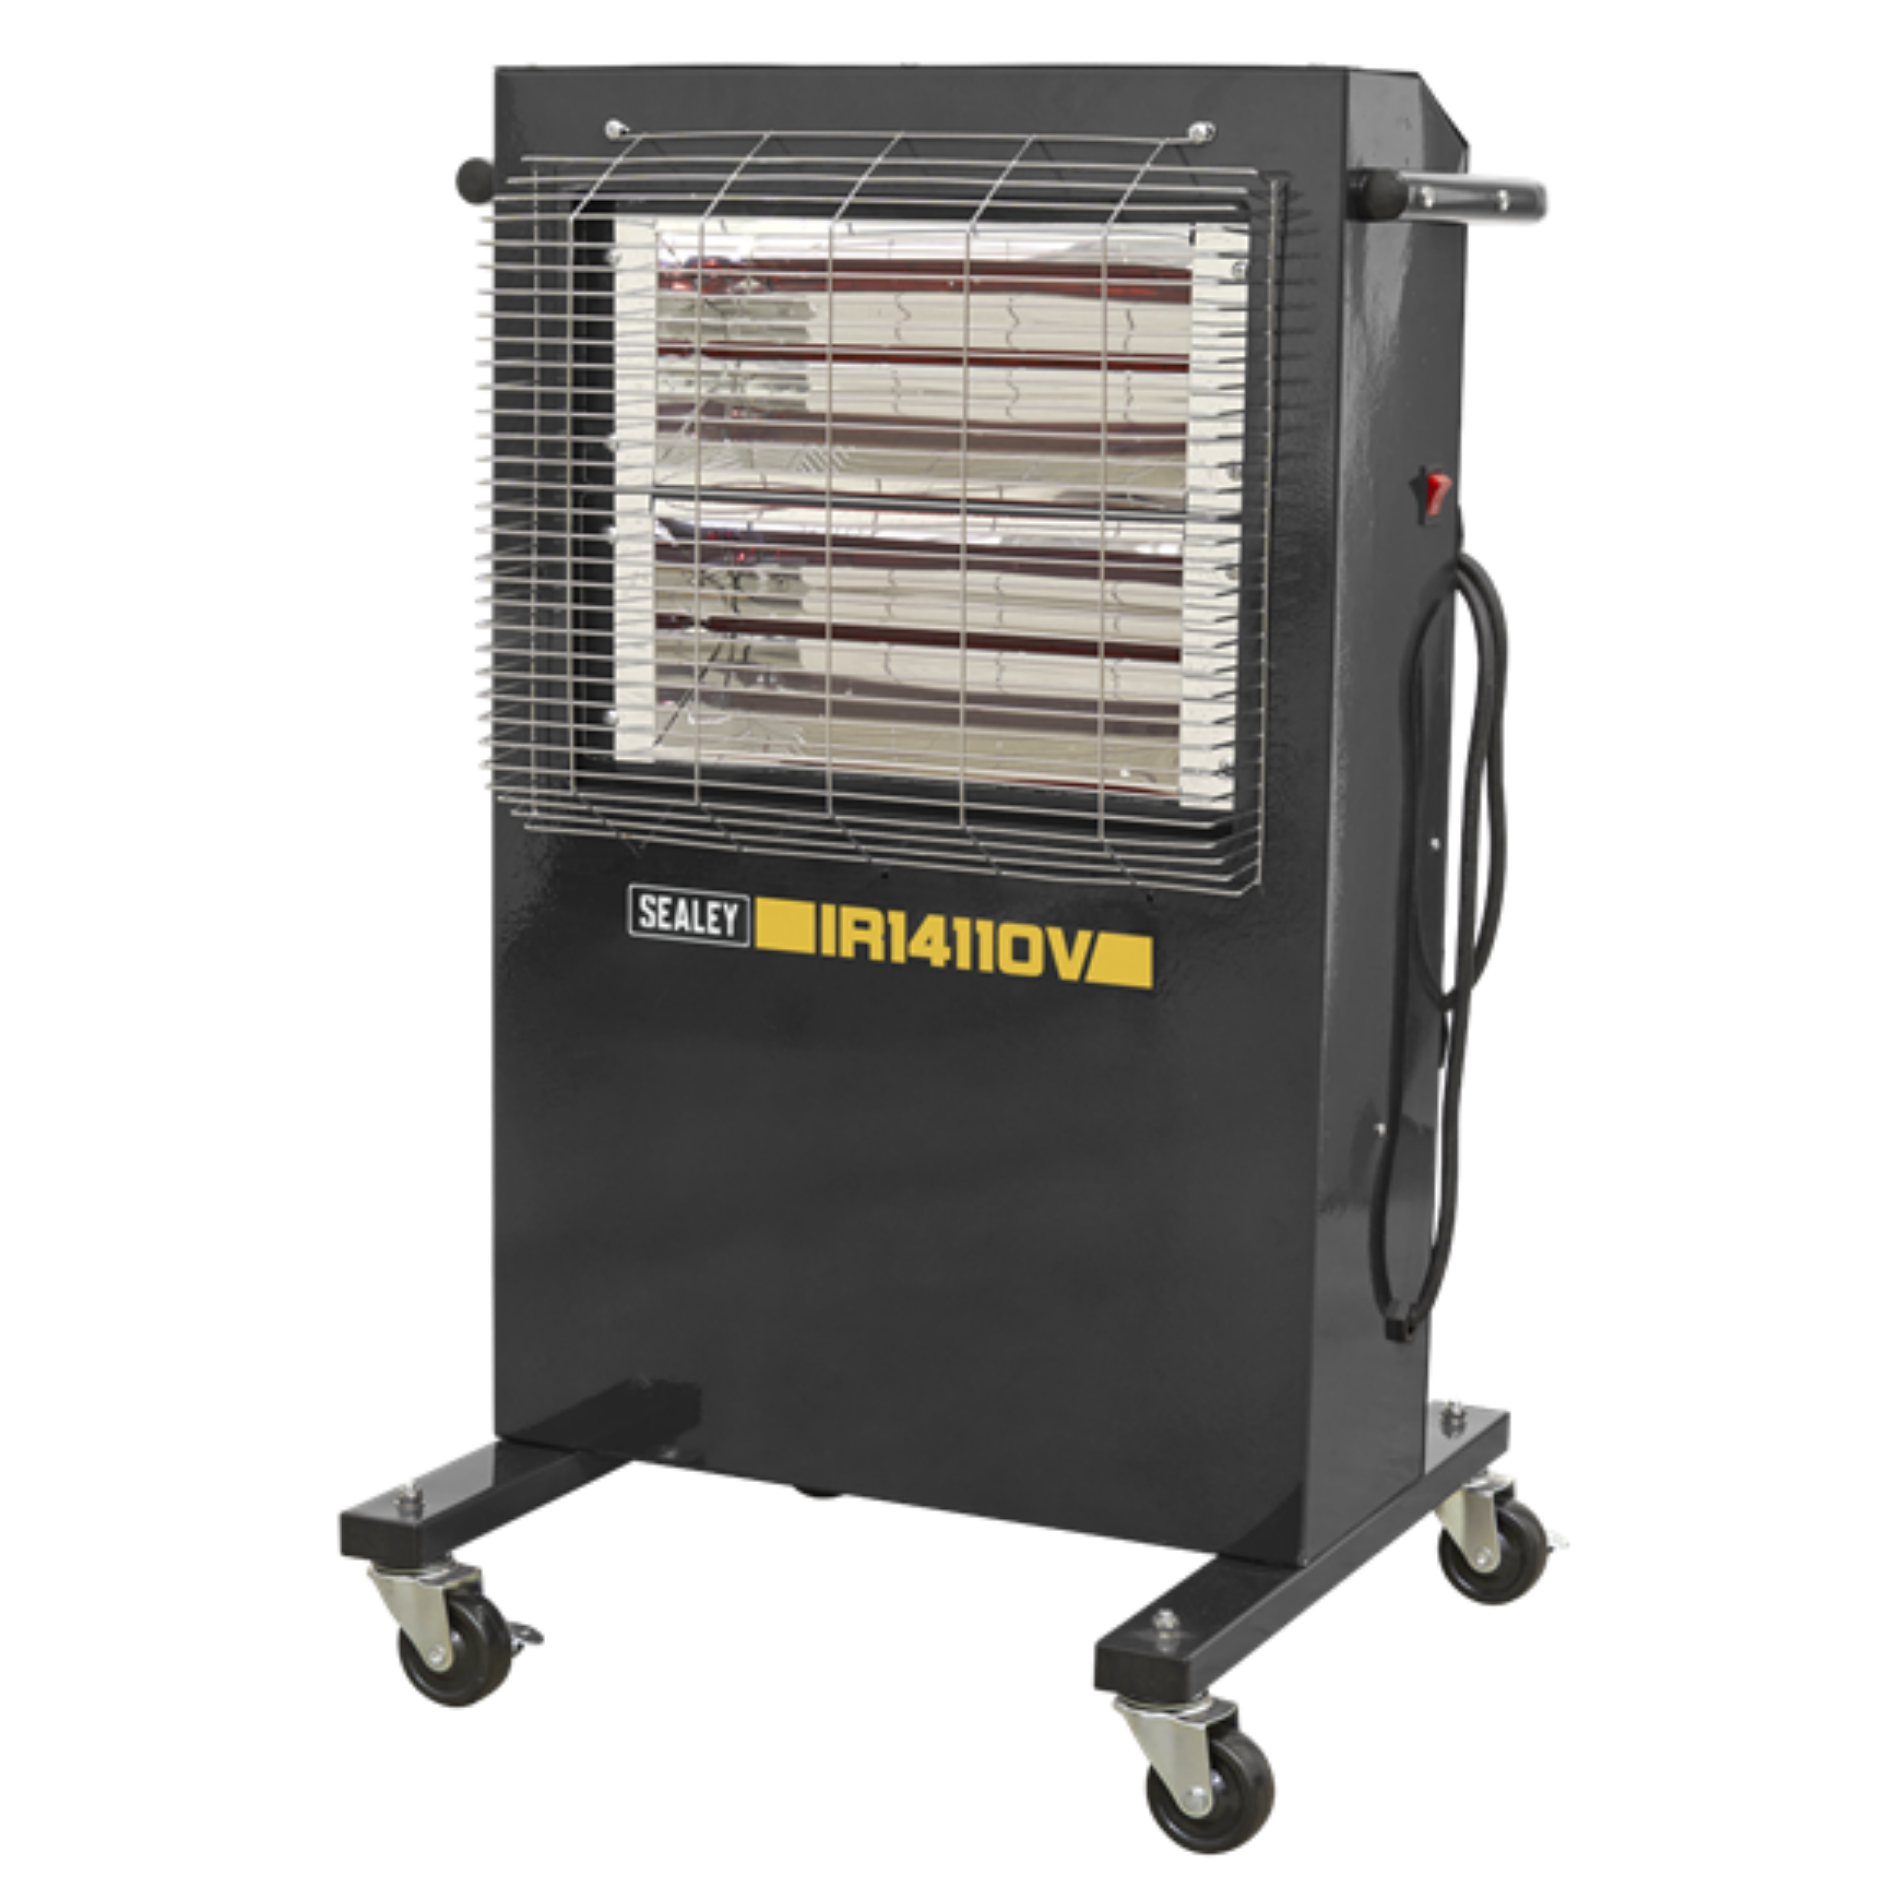 Sealey IR14110V 1.2/2.4kW 110V Infrared Cabinet Heater